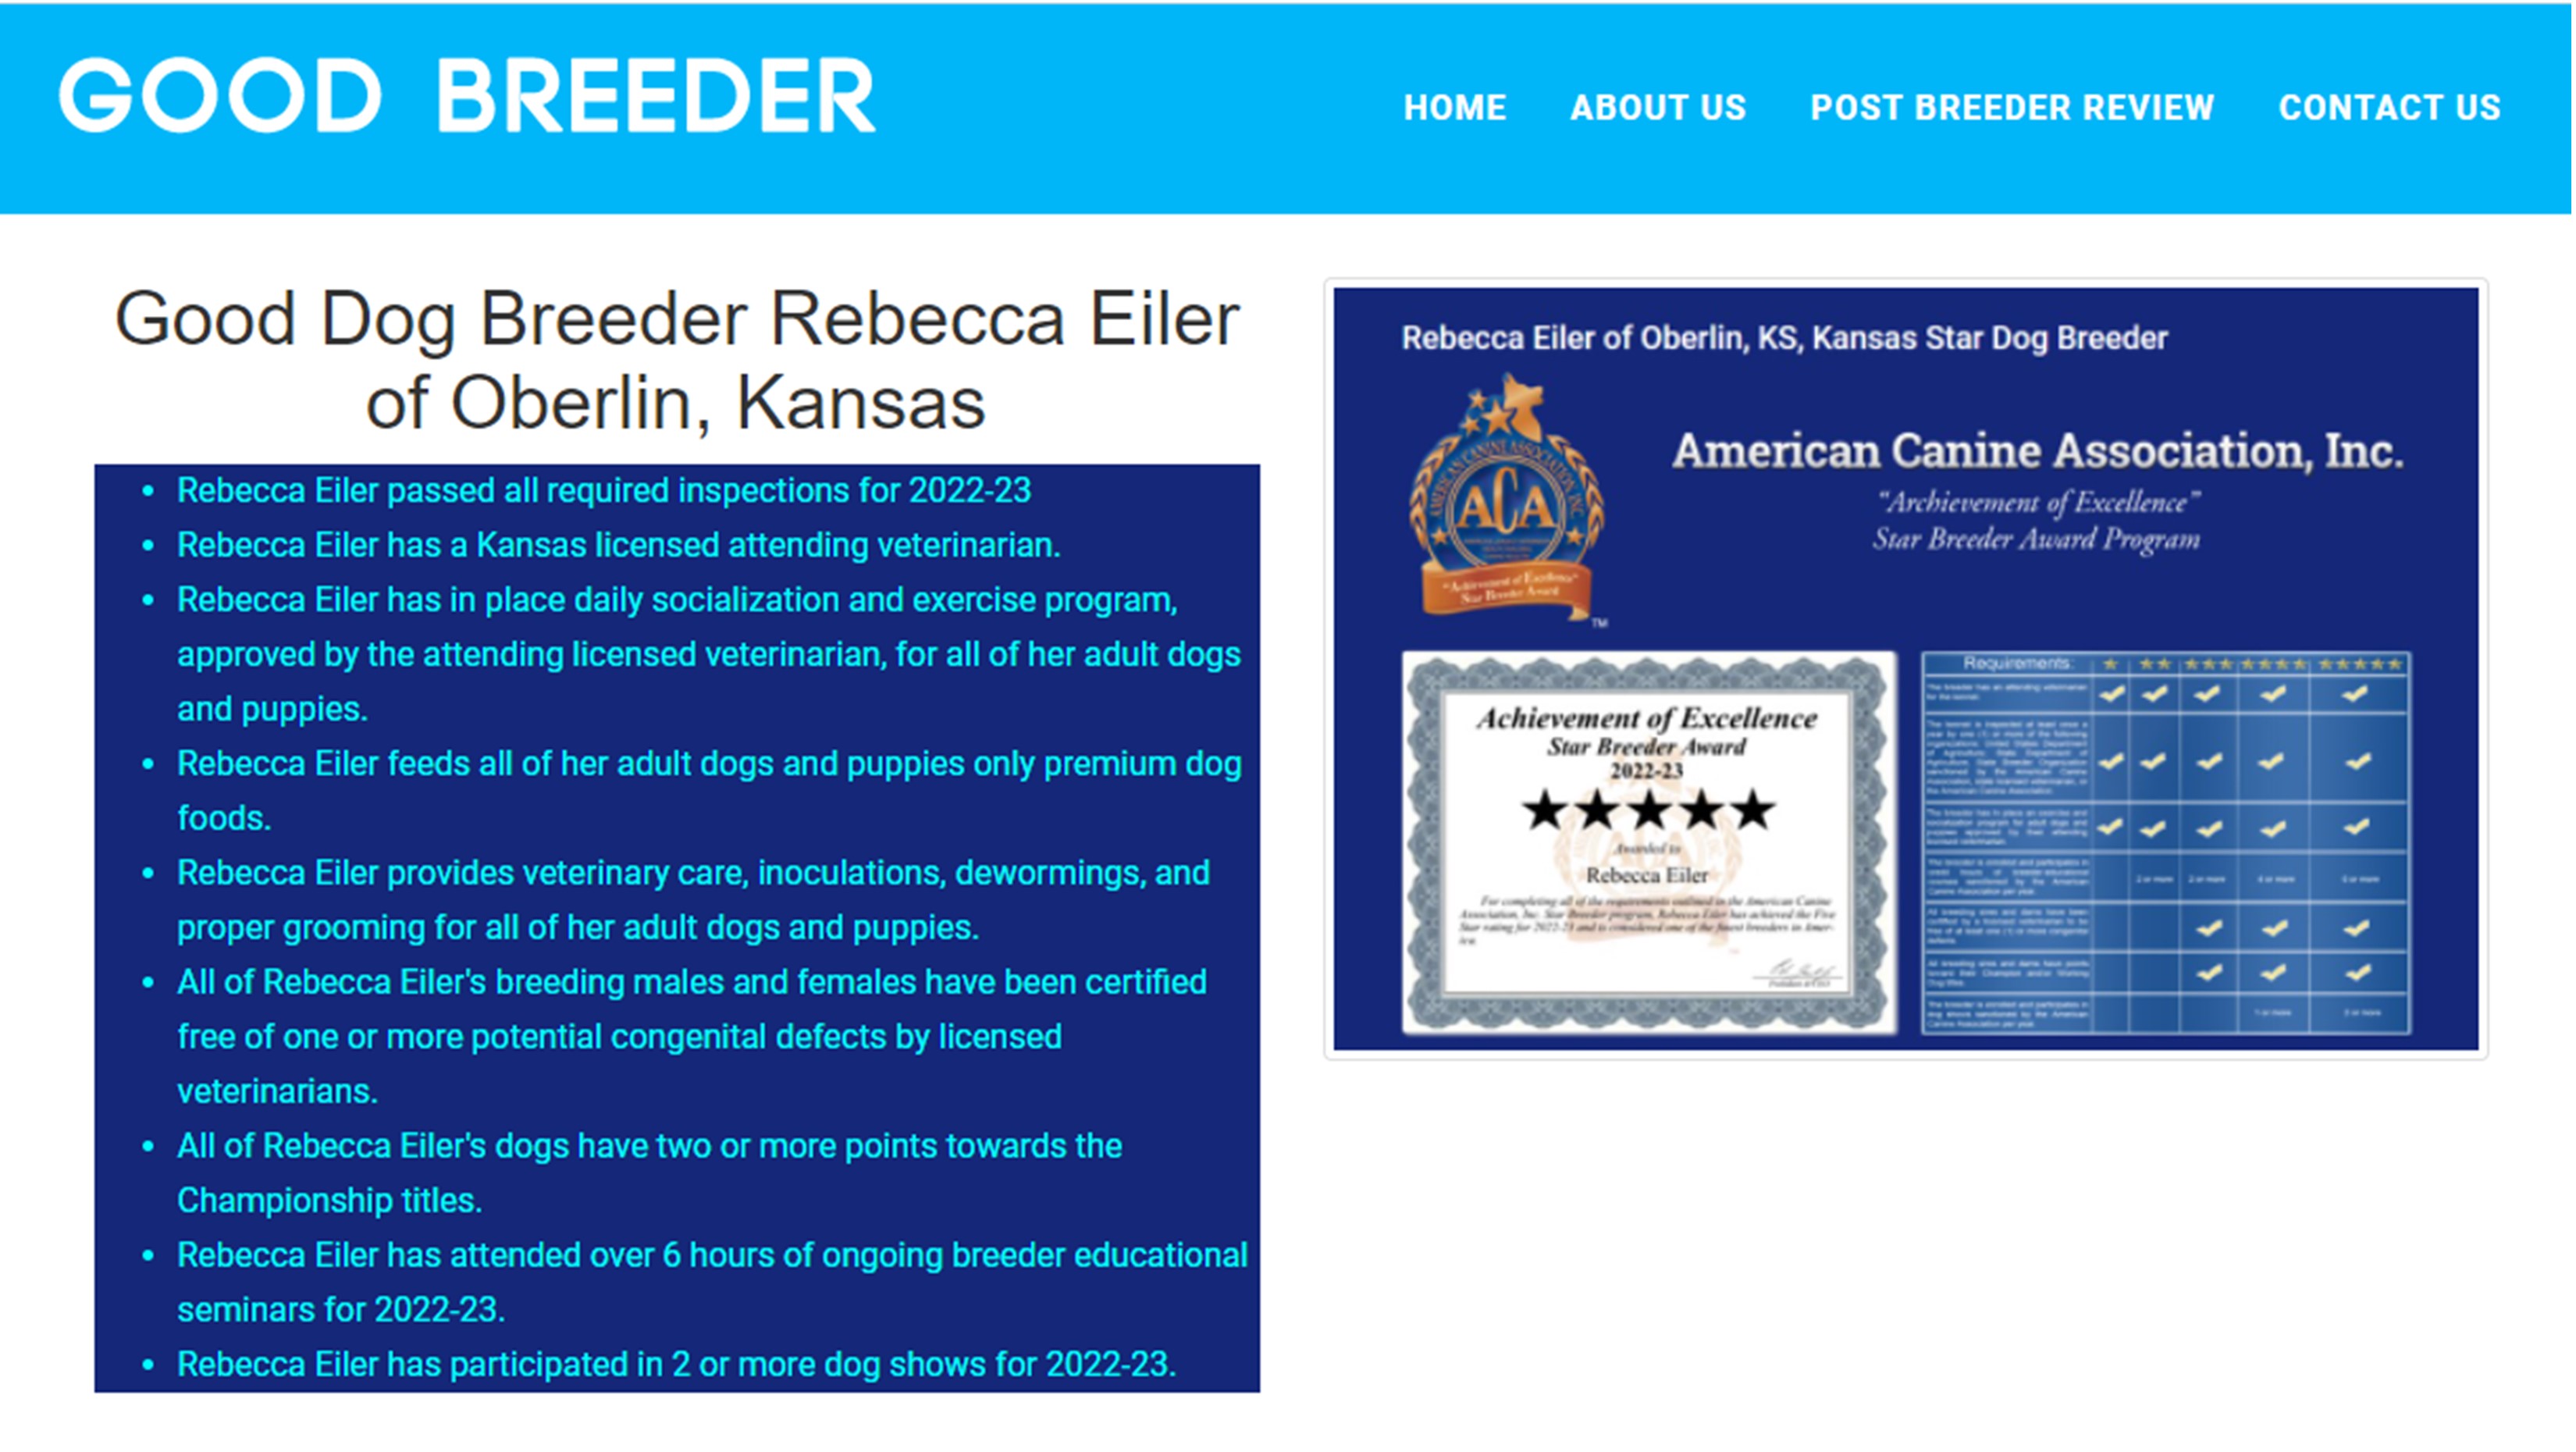 Good Dog Breeder Qualifications for Rebecca Eiler